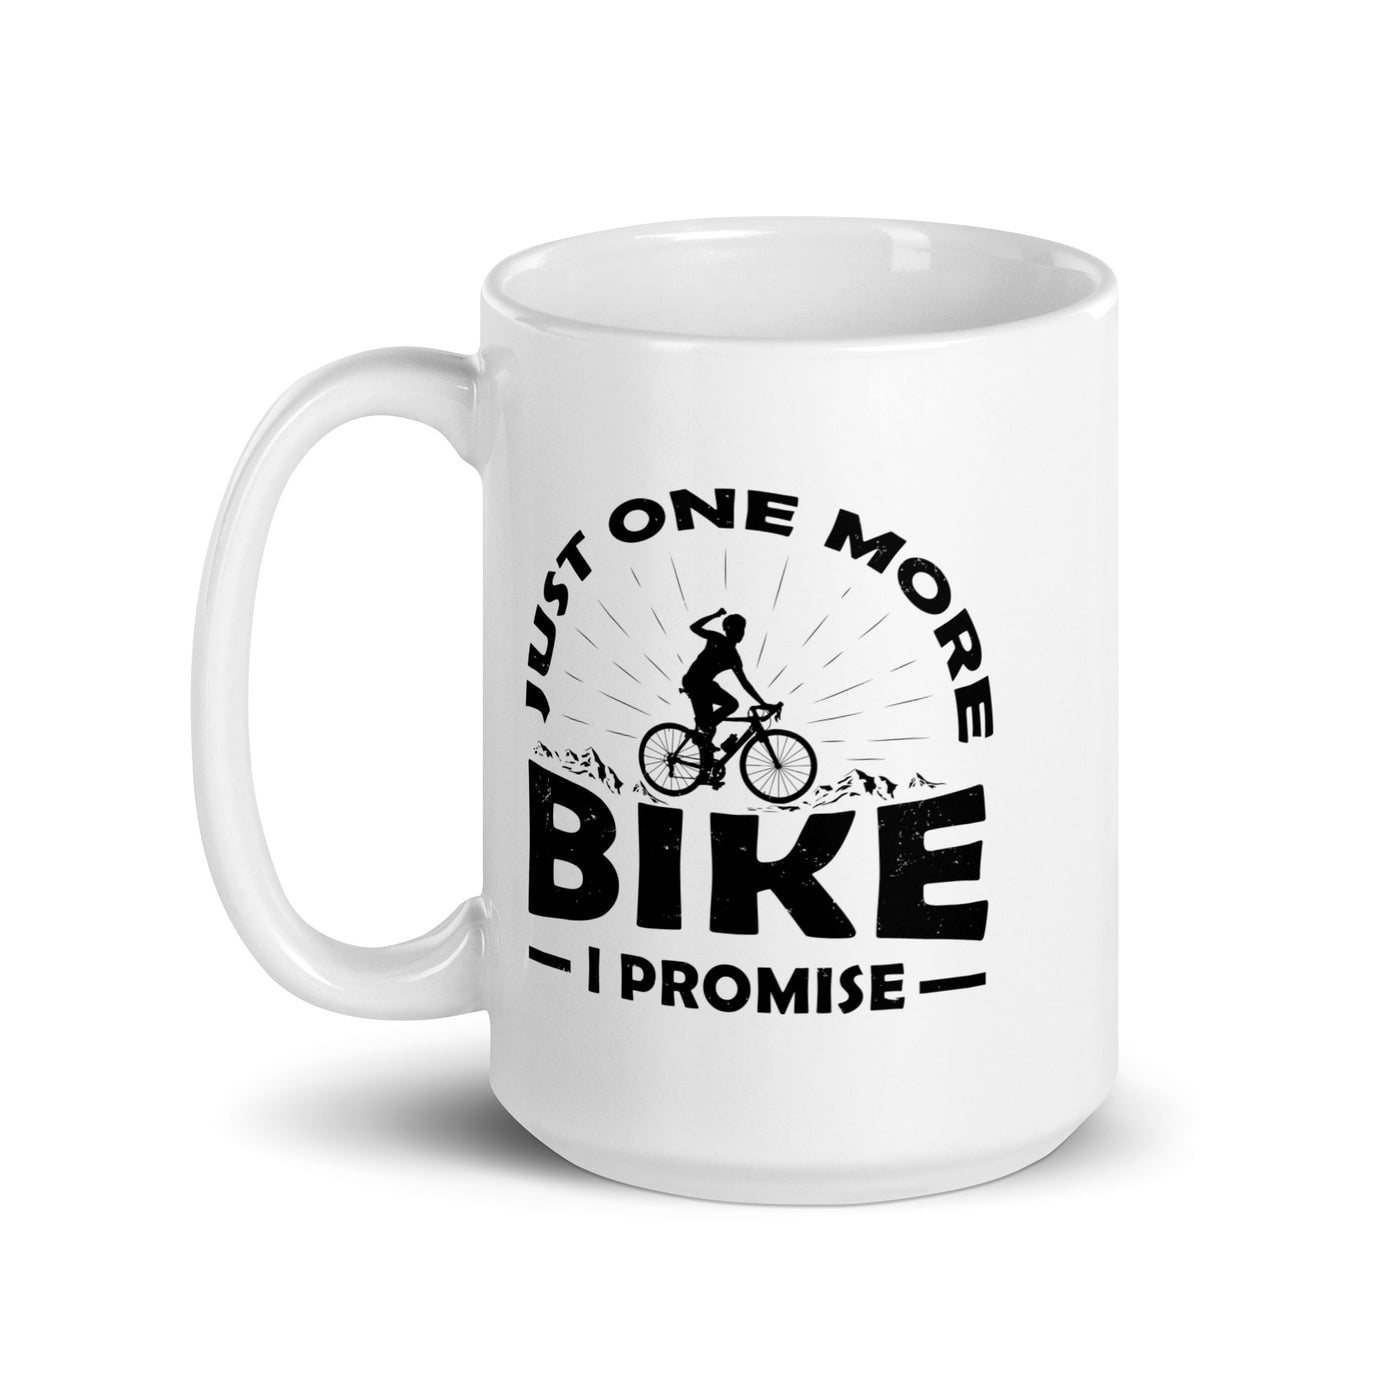 Just One More Bike, I Promise - Tasse fahrrad